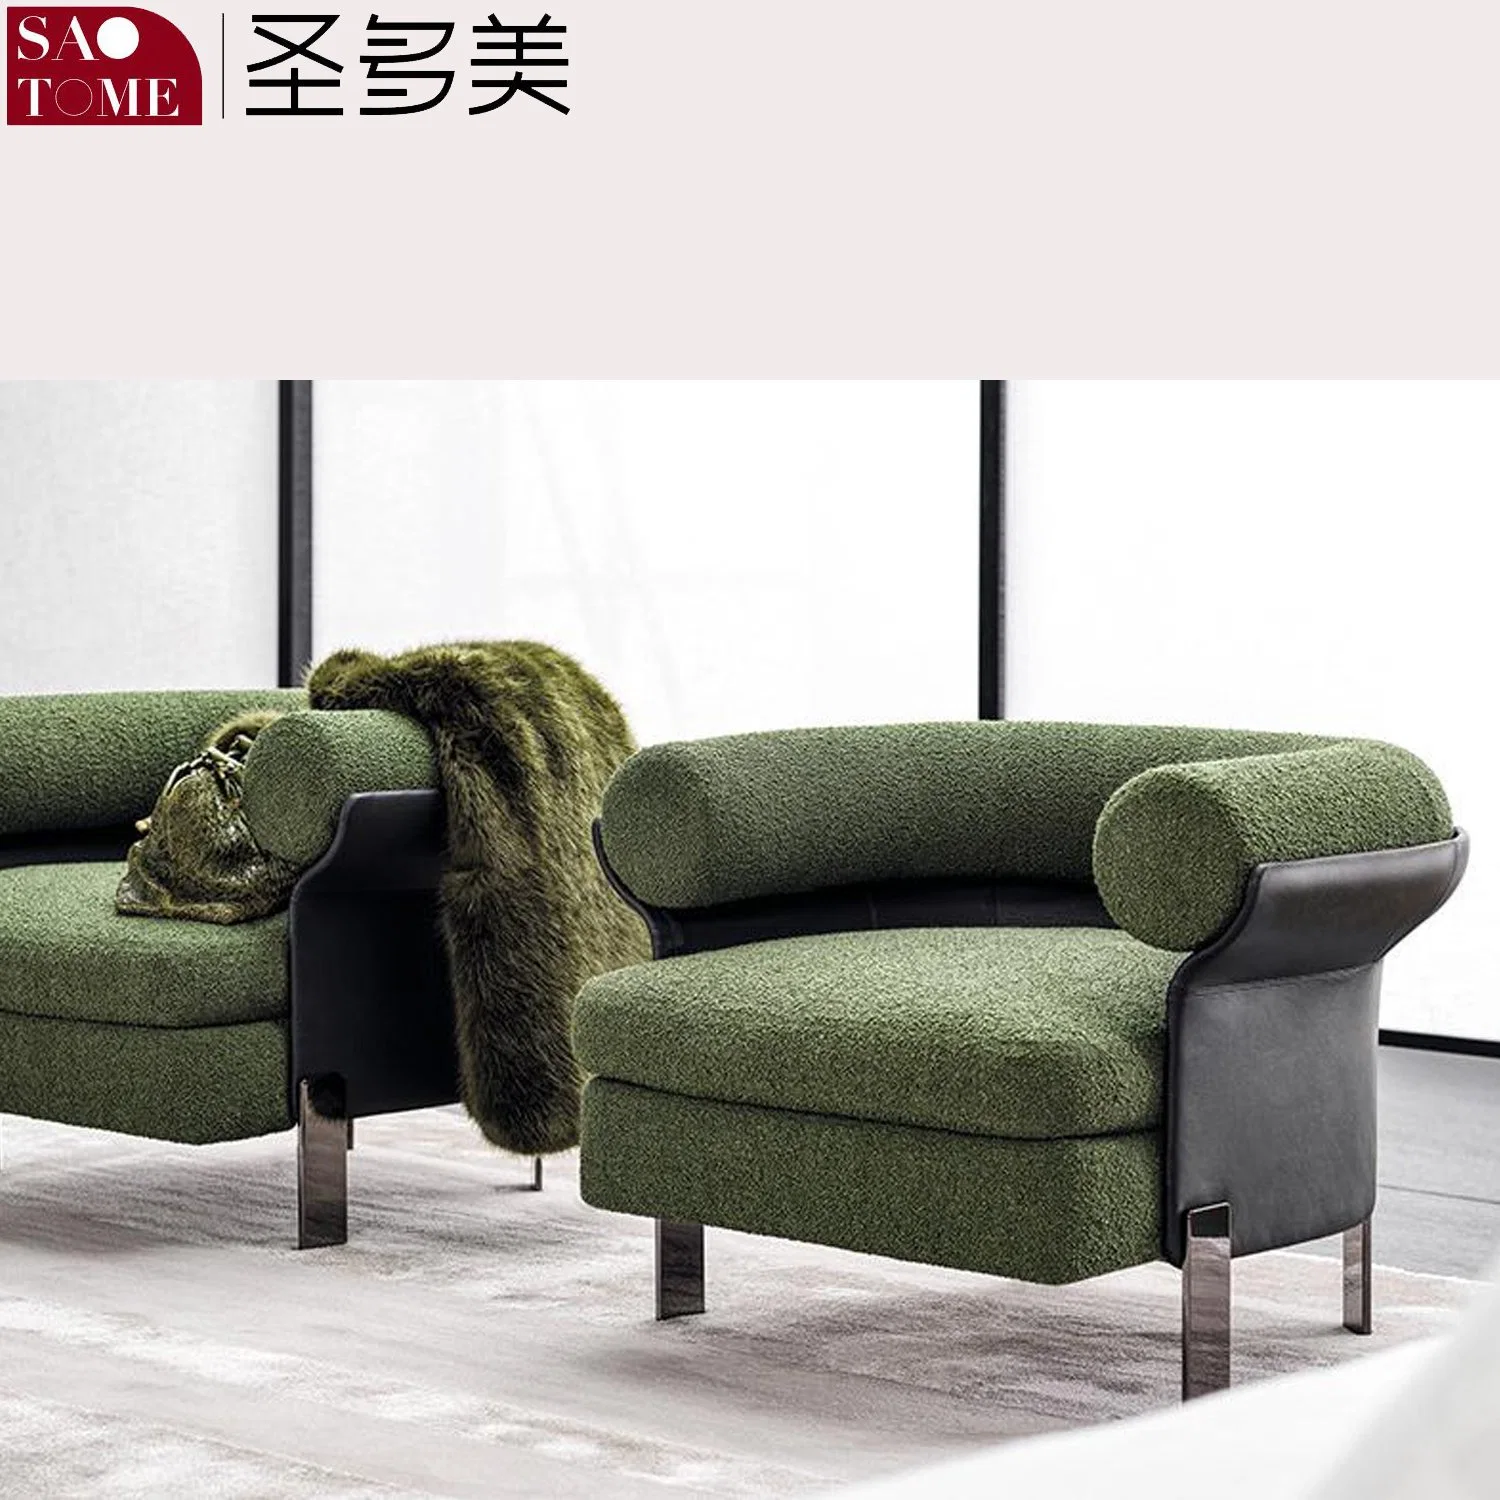 Modern Simple Luxury Hotel Home Living Room Leisure Furniture Leisure Chair